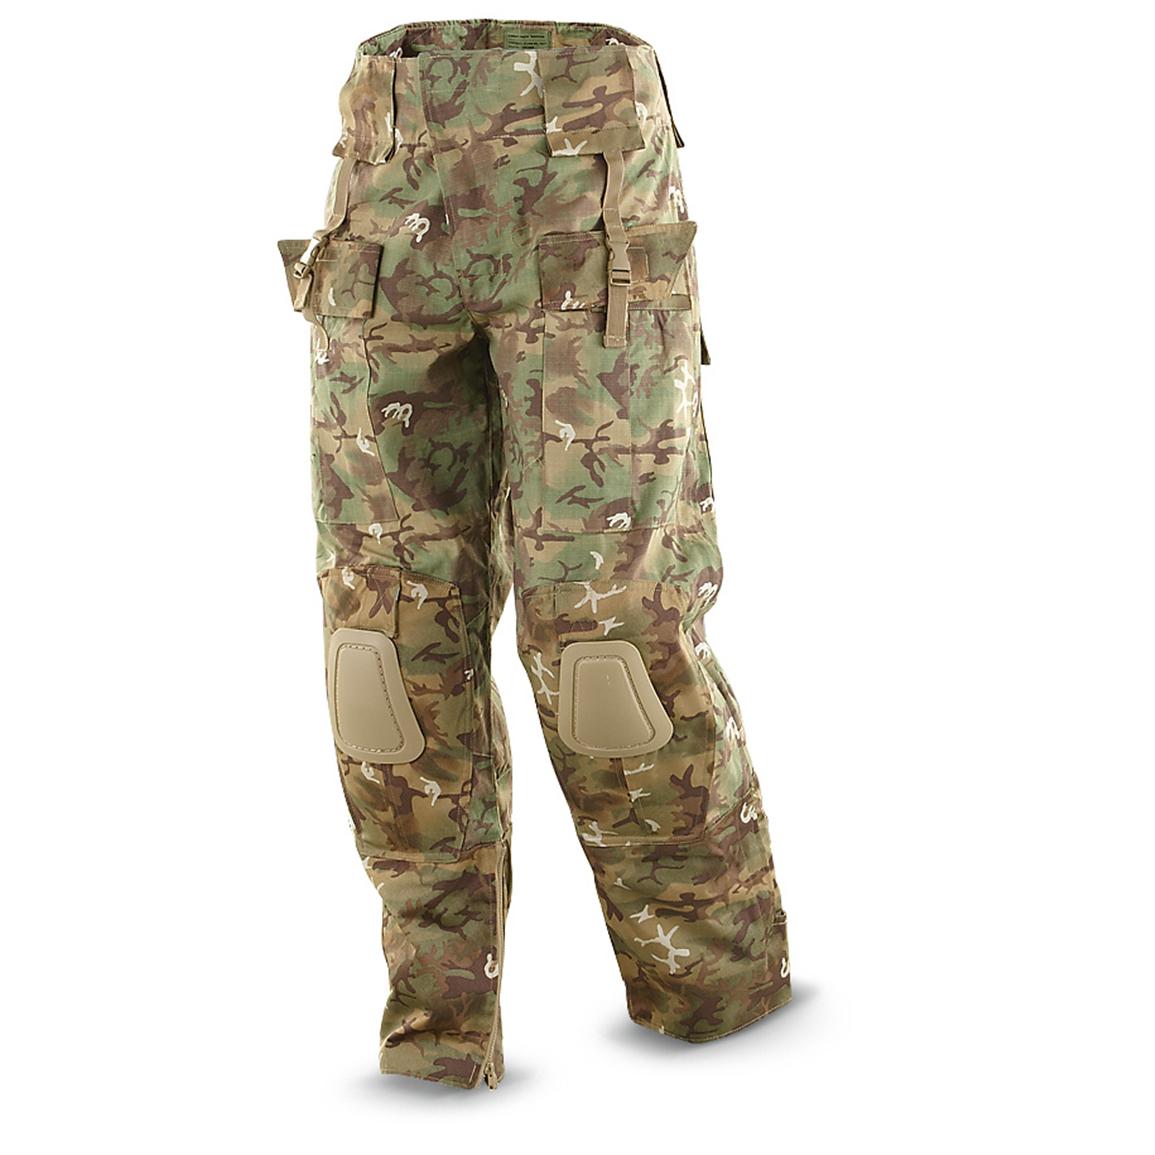 Mil-Tec Men's Military Surplus Arid Camo Warrior Pants, Woodland